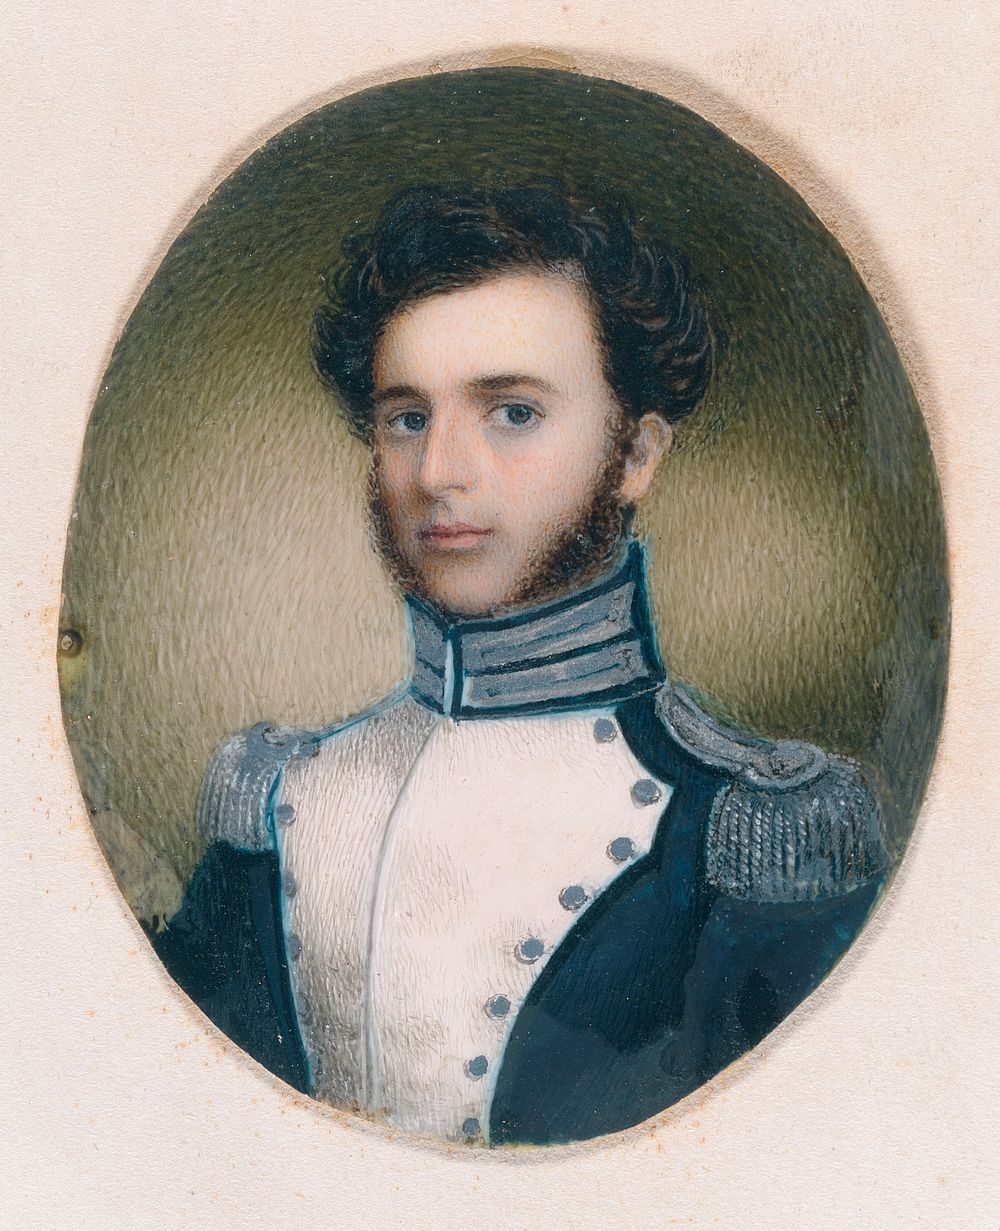 Captain George Hancock Griffin, U.S.A.